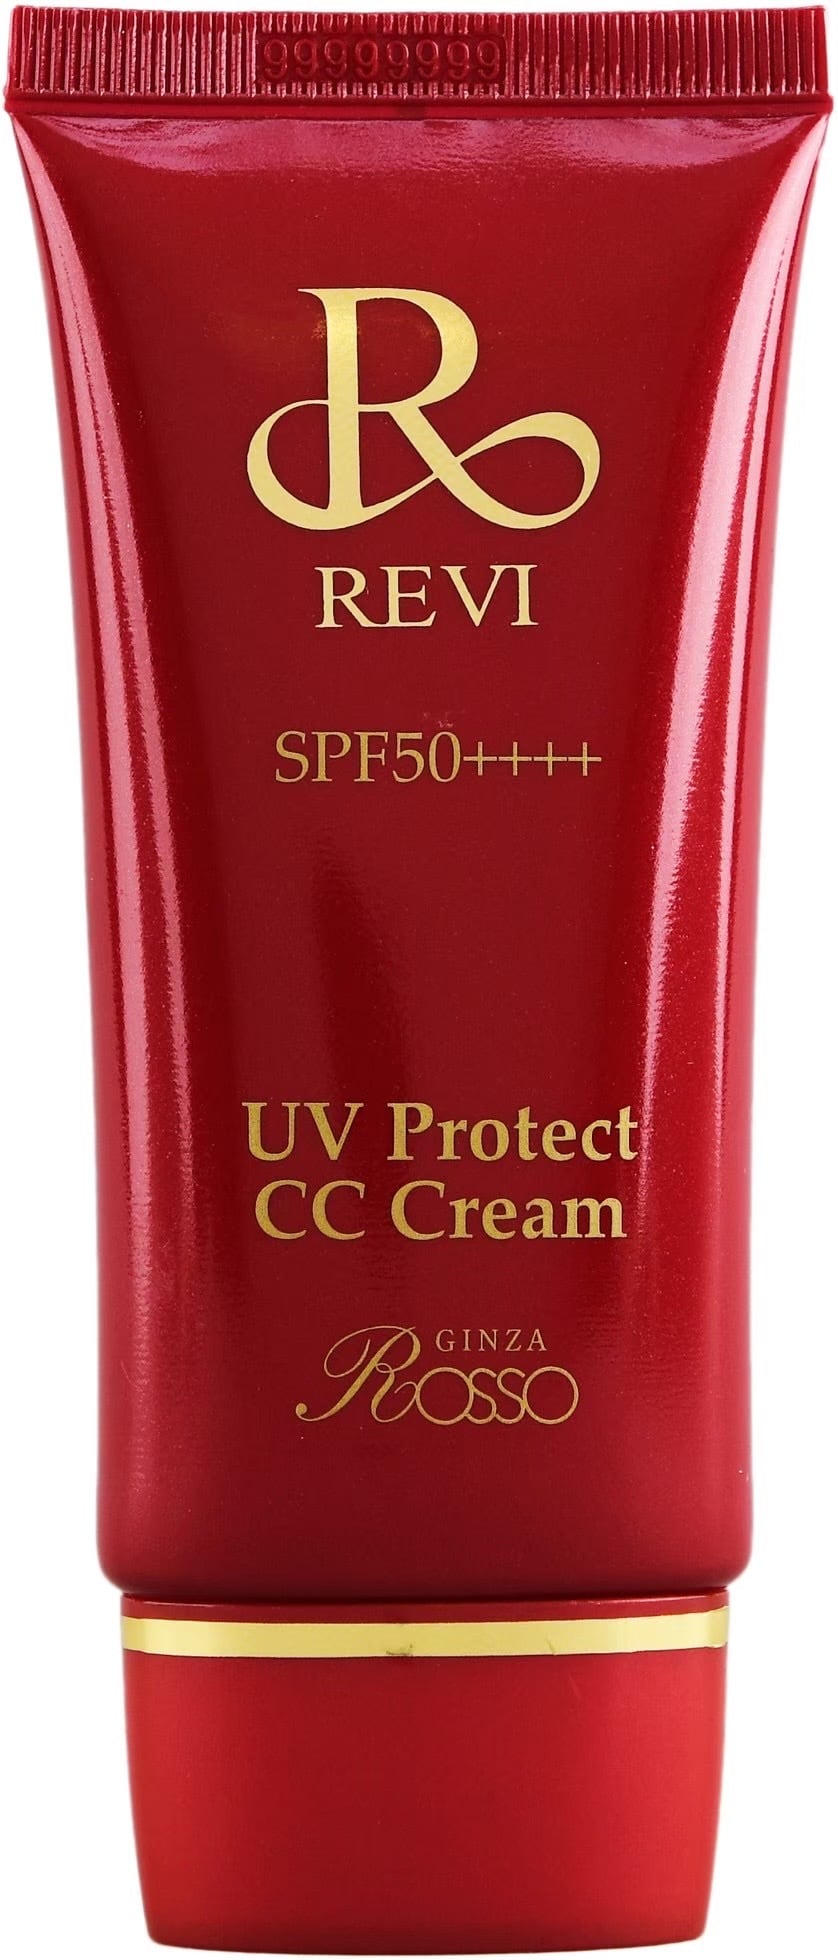 REVI UVプロテクトCCクリーム